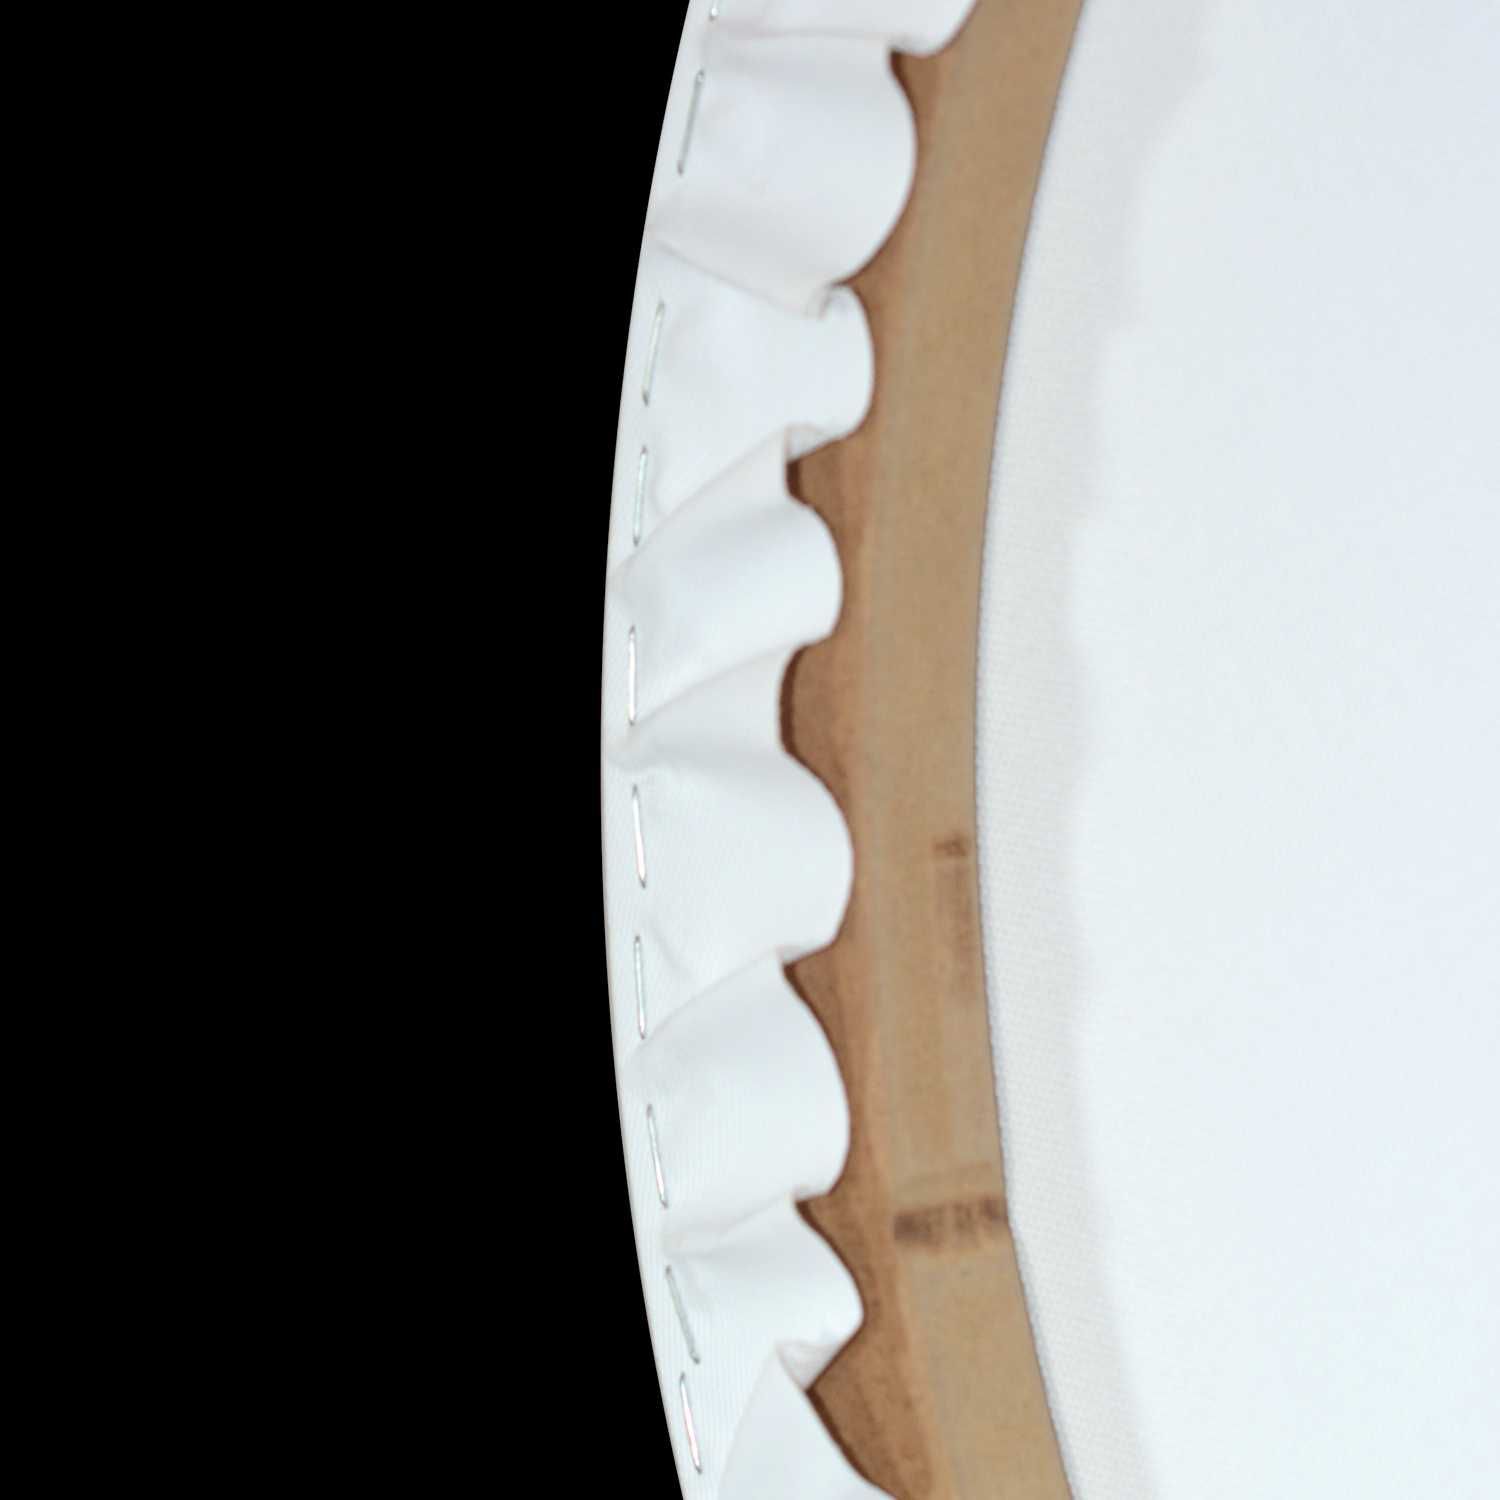 80 cm Podobrazie malarskie okrągłe średnica 80 cm mandala tondo baza